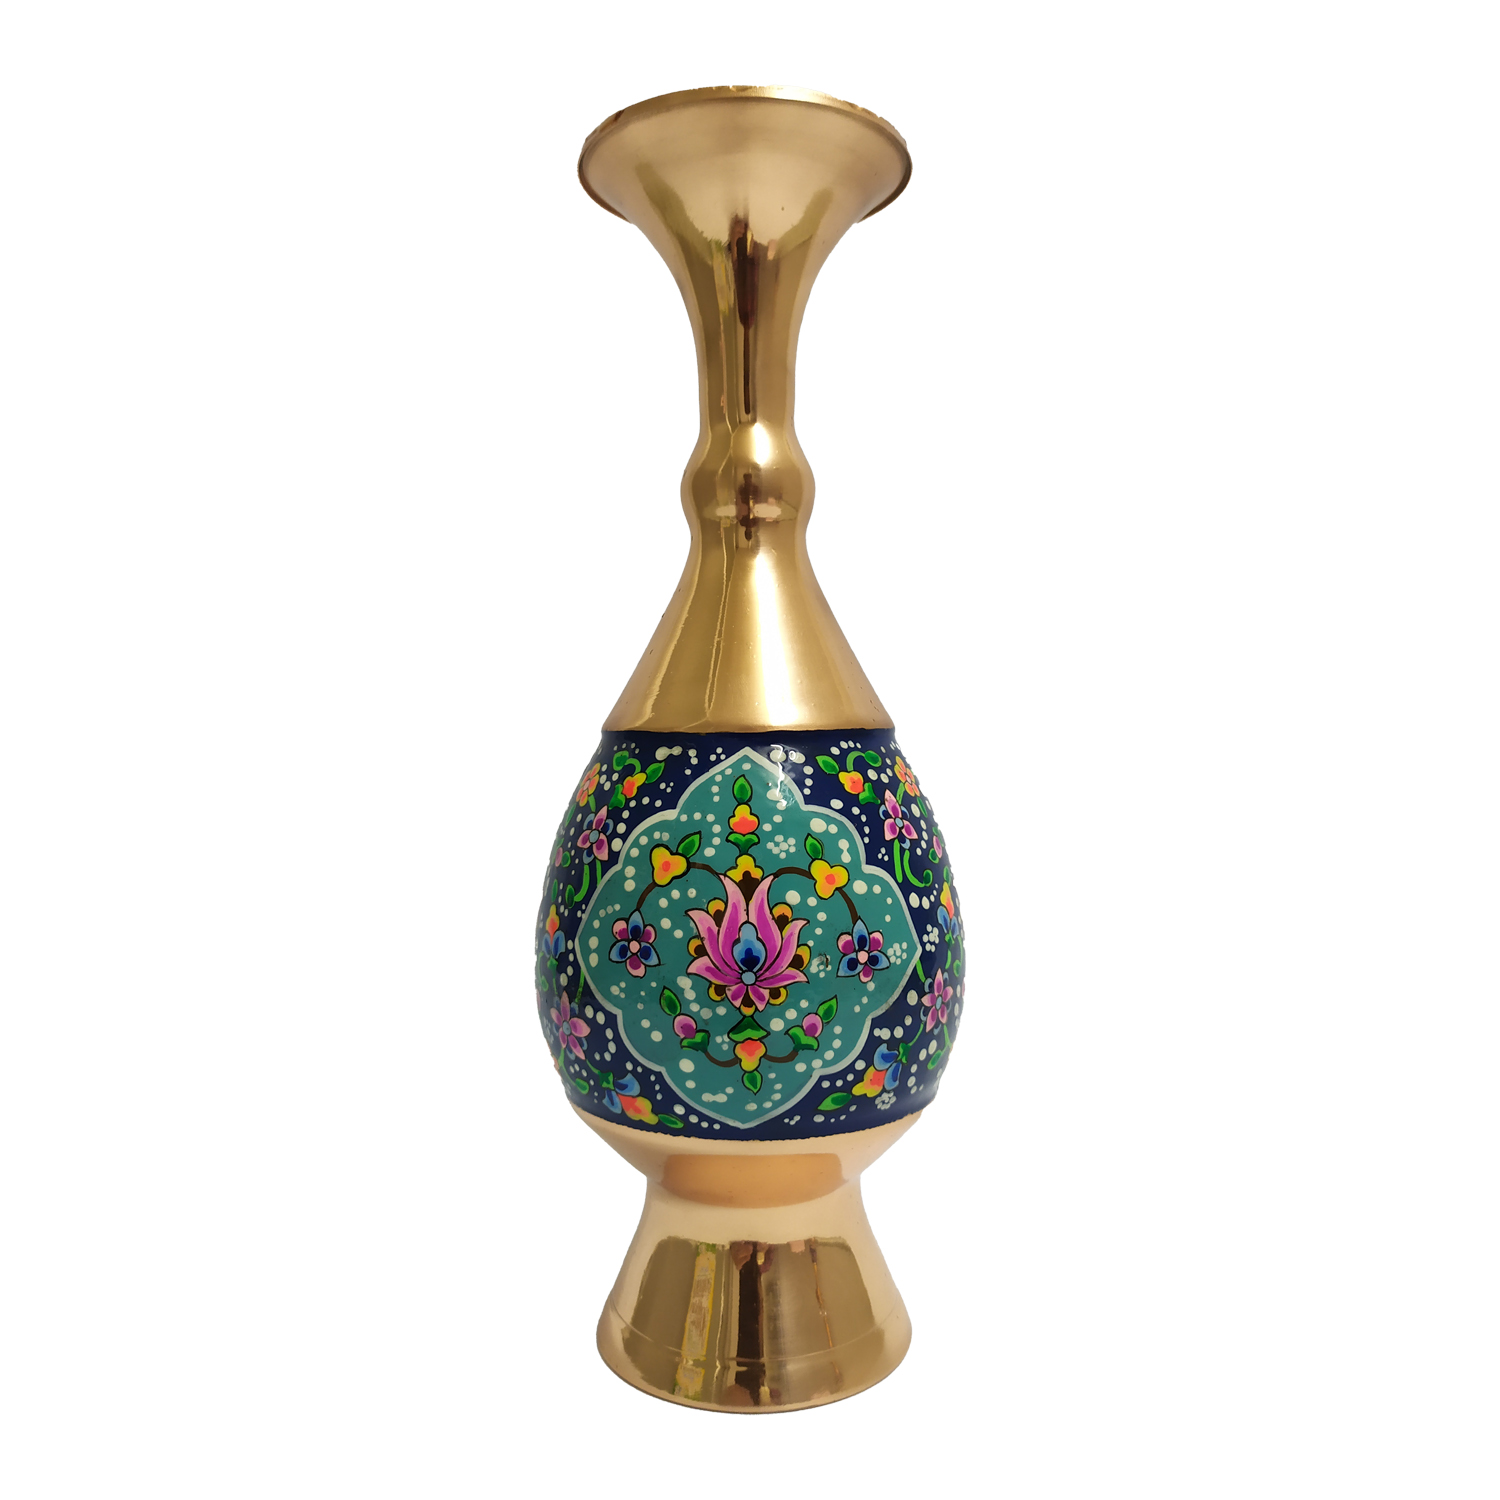 Copper Enamel vase, code 601